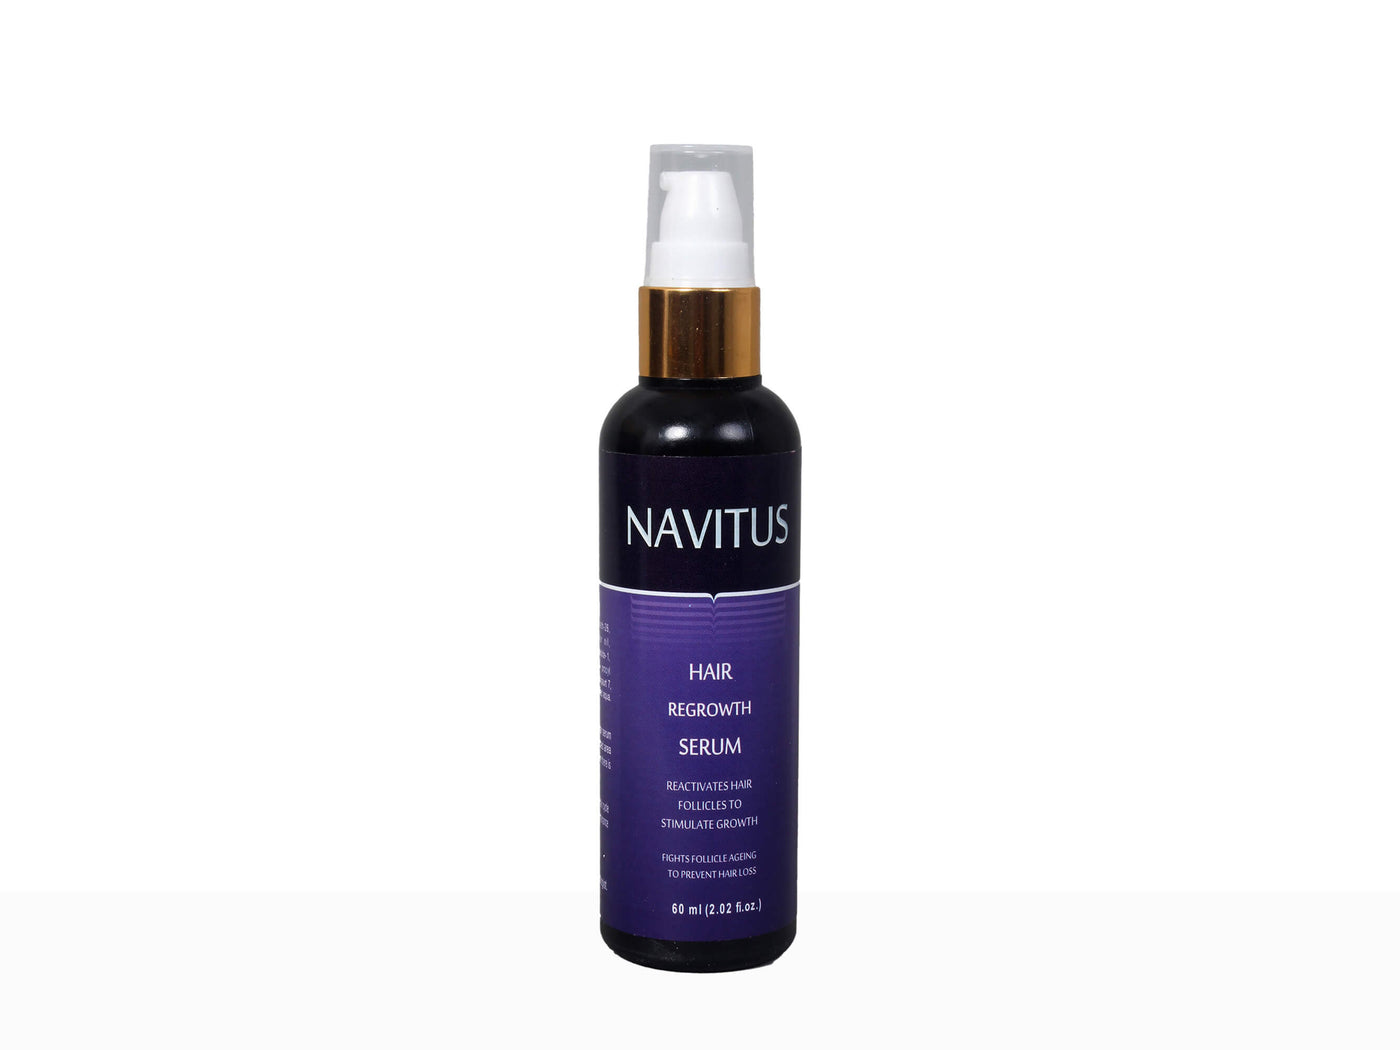 Navitus Hair Regrowth Serum